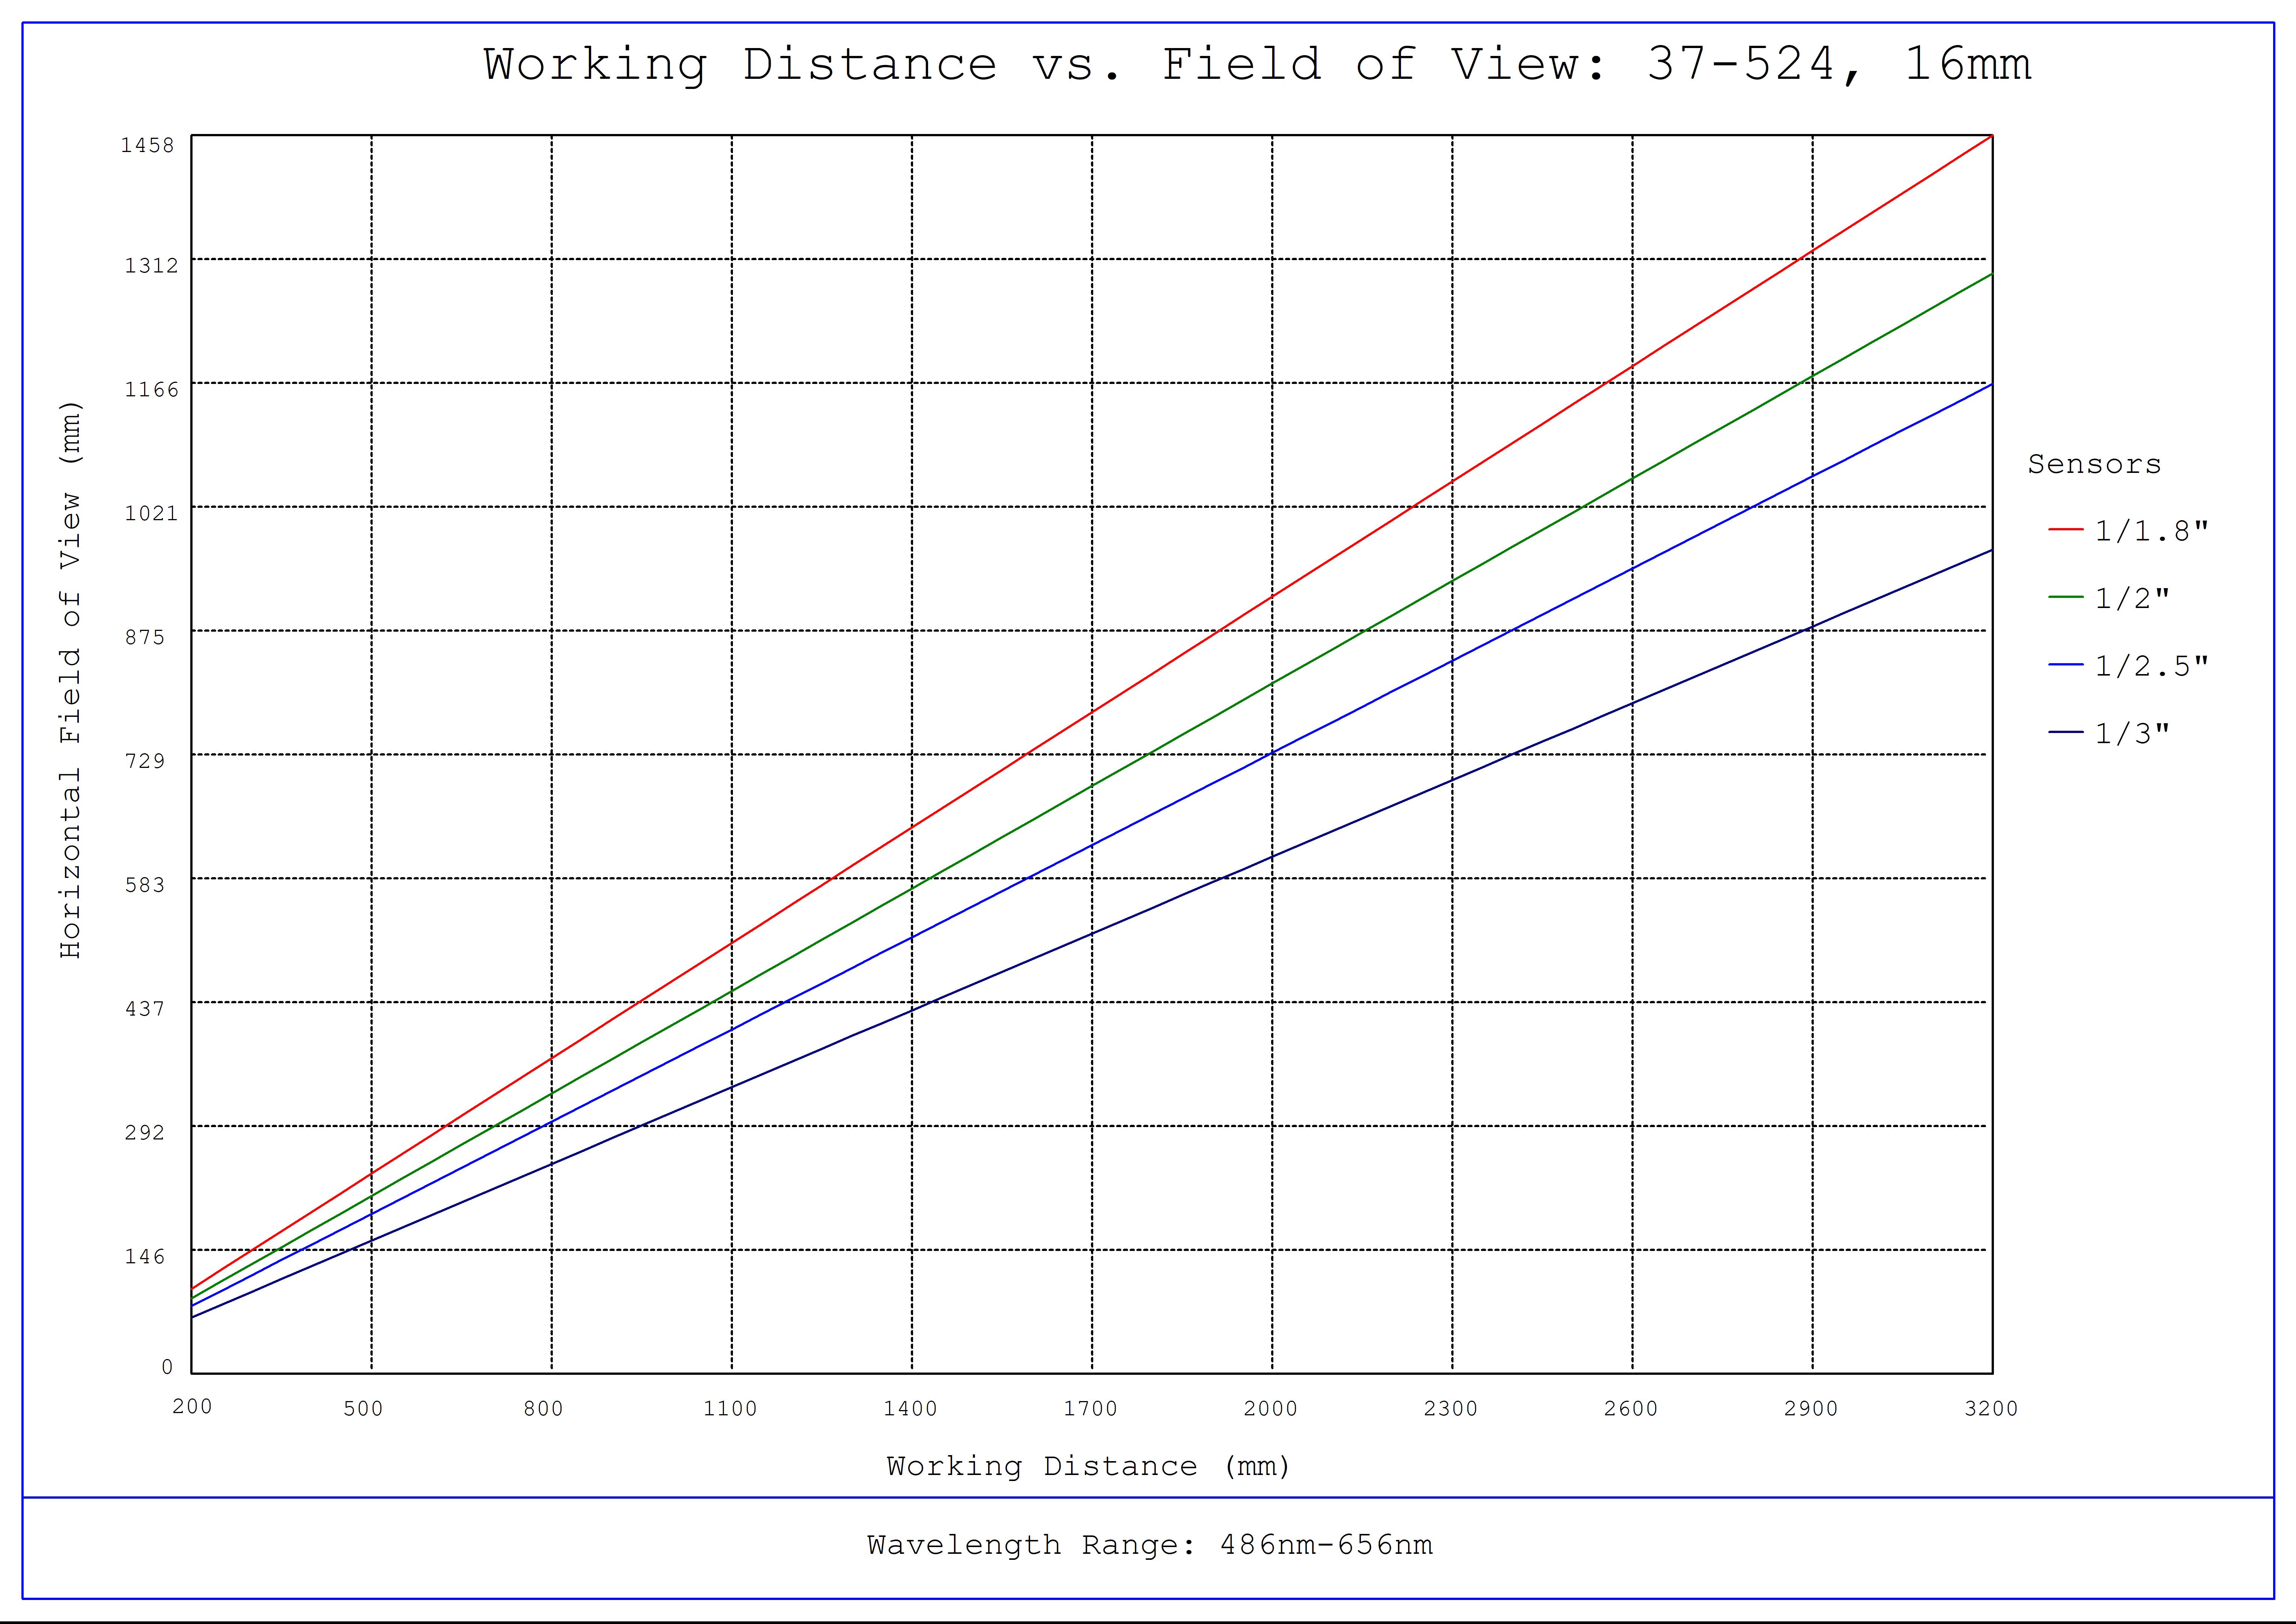 #37-524, 16mm FL, Liquid Lens M12 Lens, Working Distance versus Field of View Plot